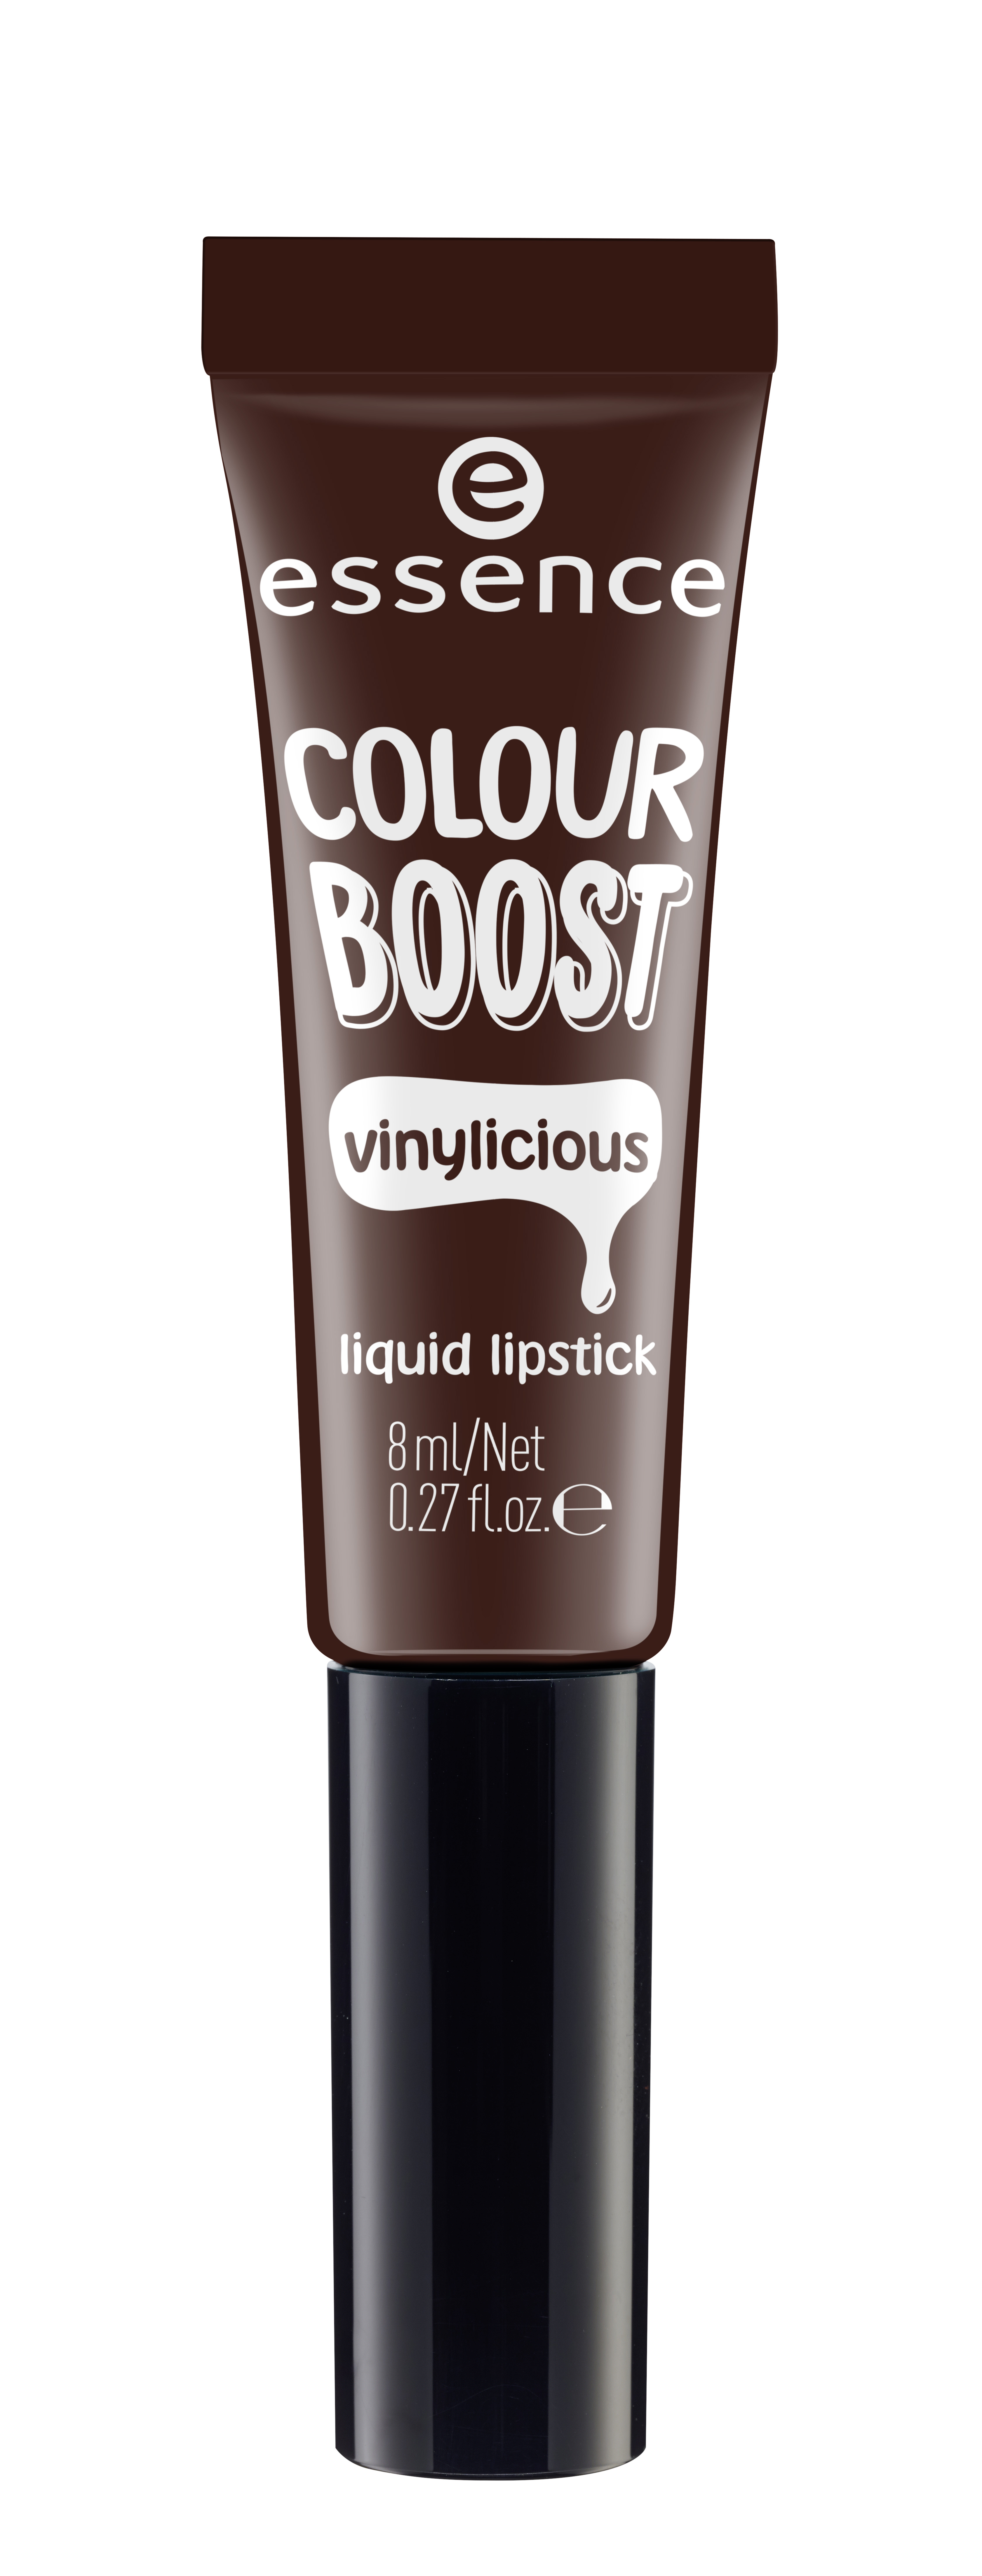 ess. colour boost vinylicious liquid lipstick 10